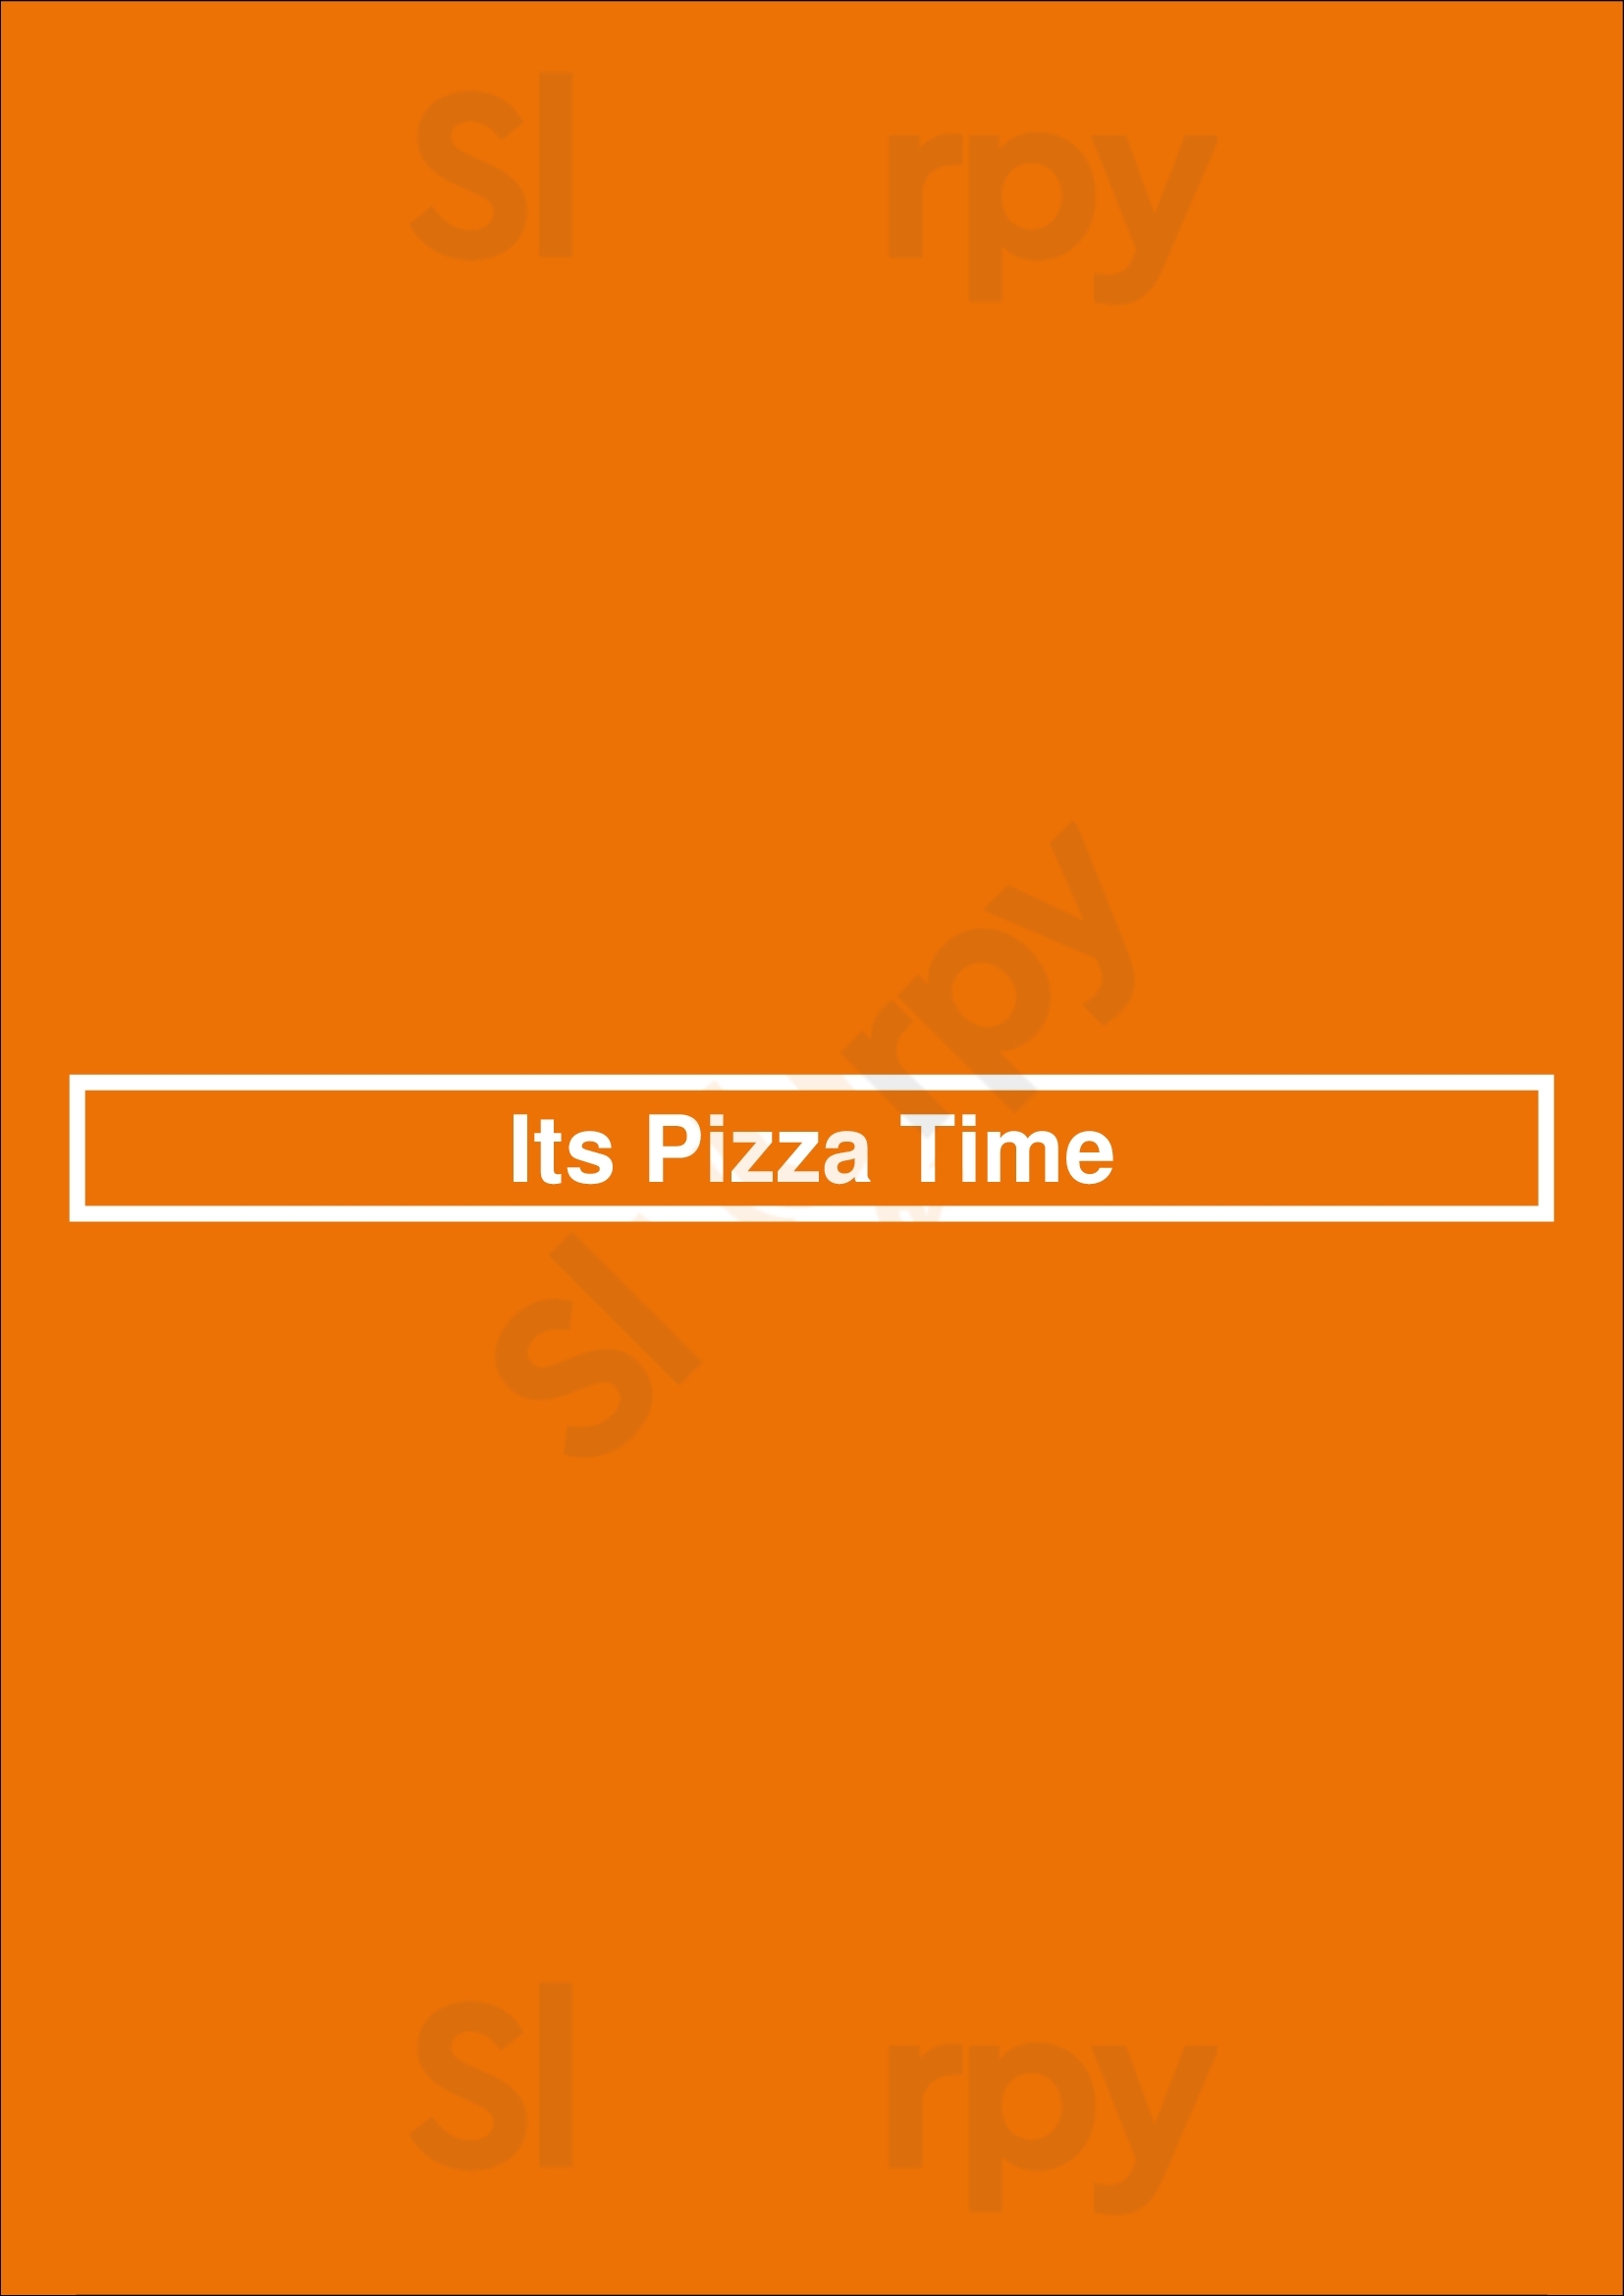 Its Pizza Time Cardiff Menu - 1